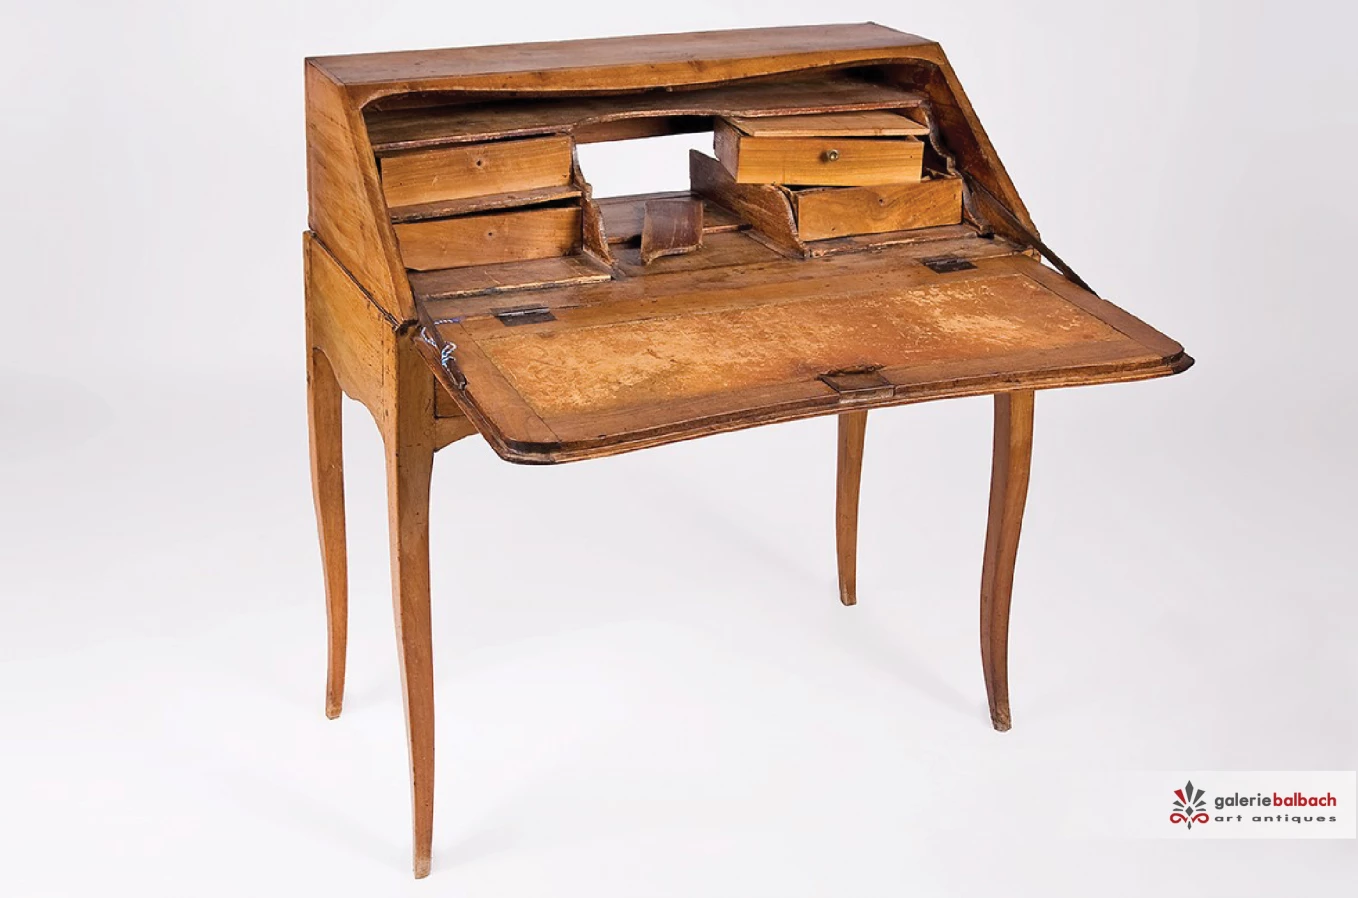 Restoring an antique desk